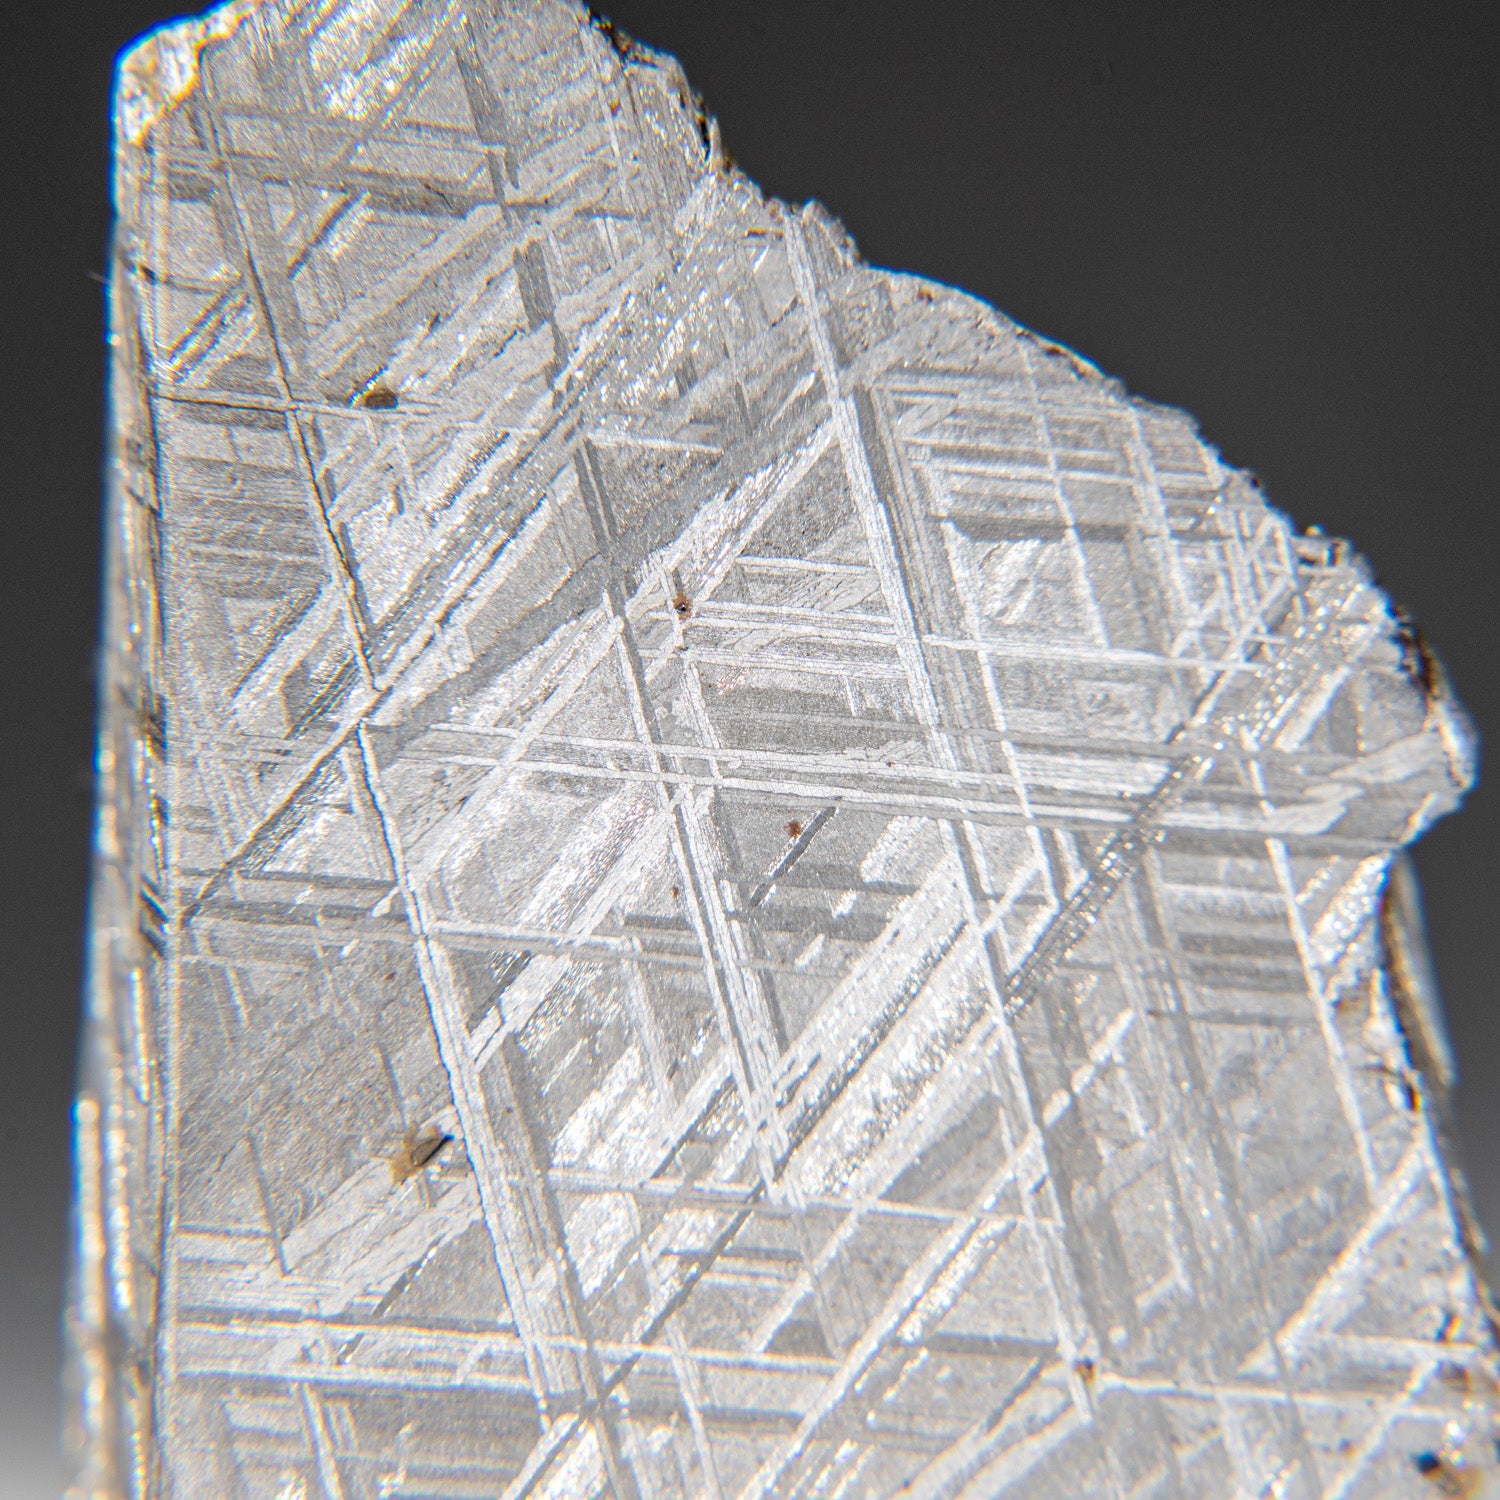 Genuine Muonionalusta Meteorite Slice (1.15 lbs)